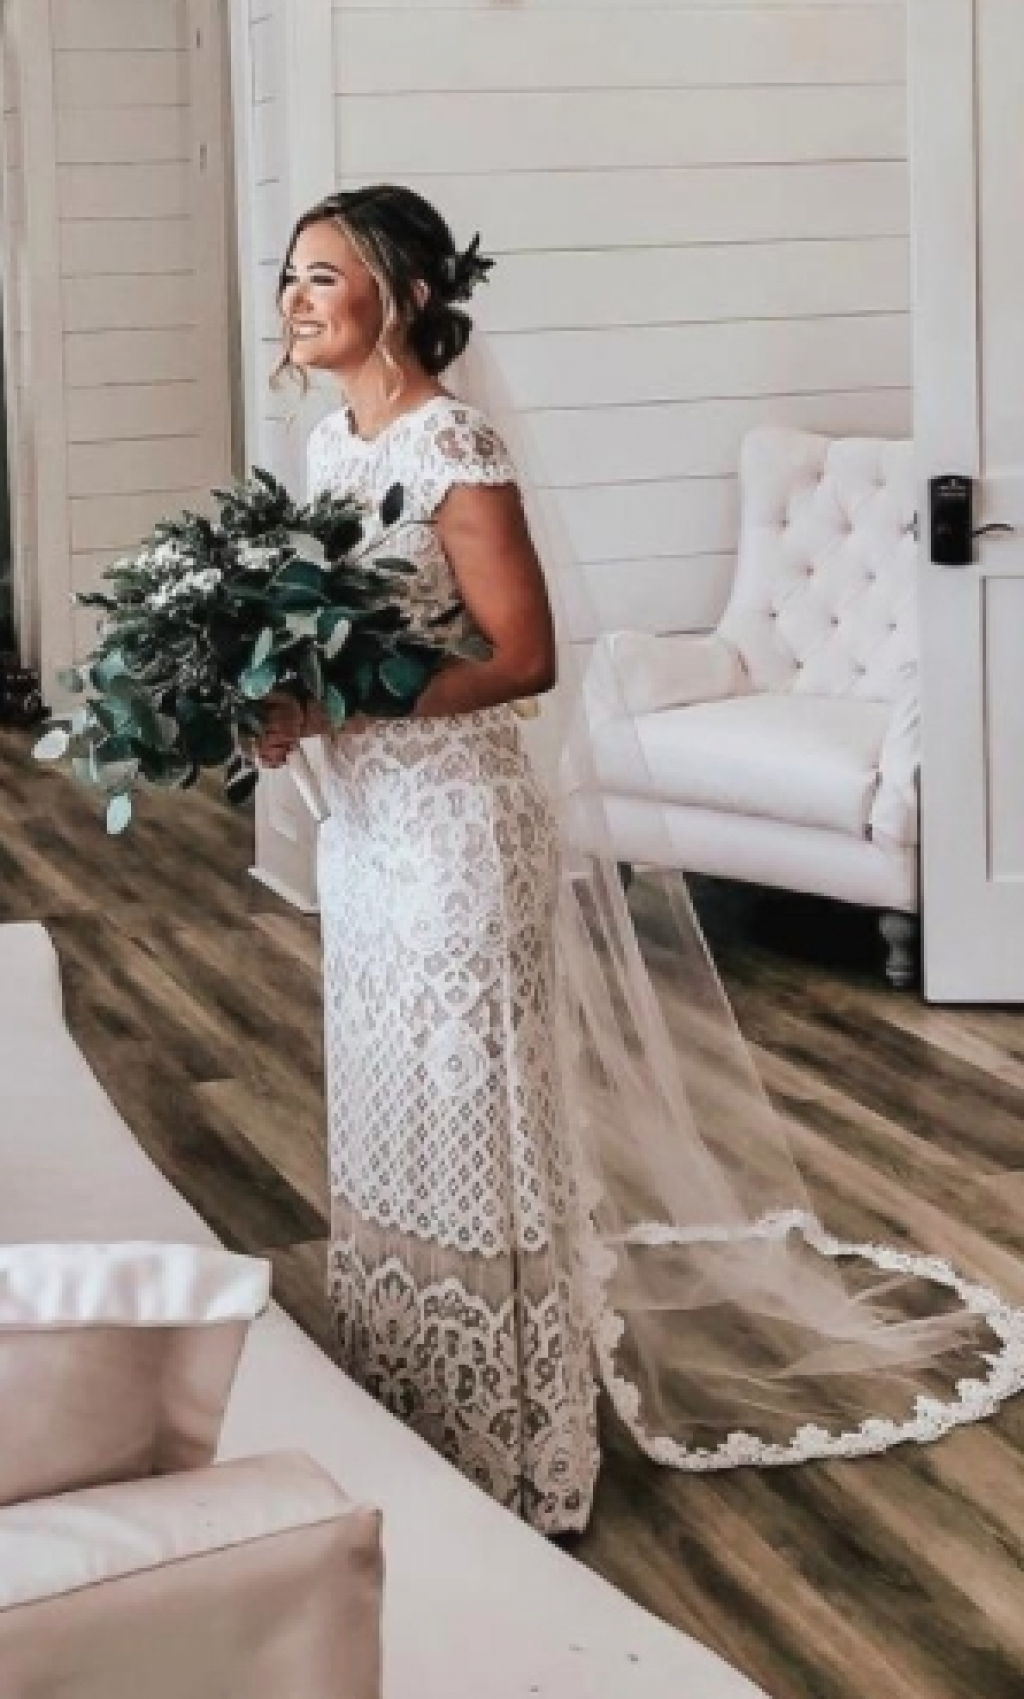 Bride wearing chapel length veil